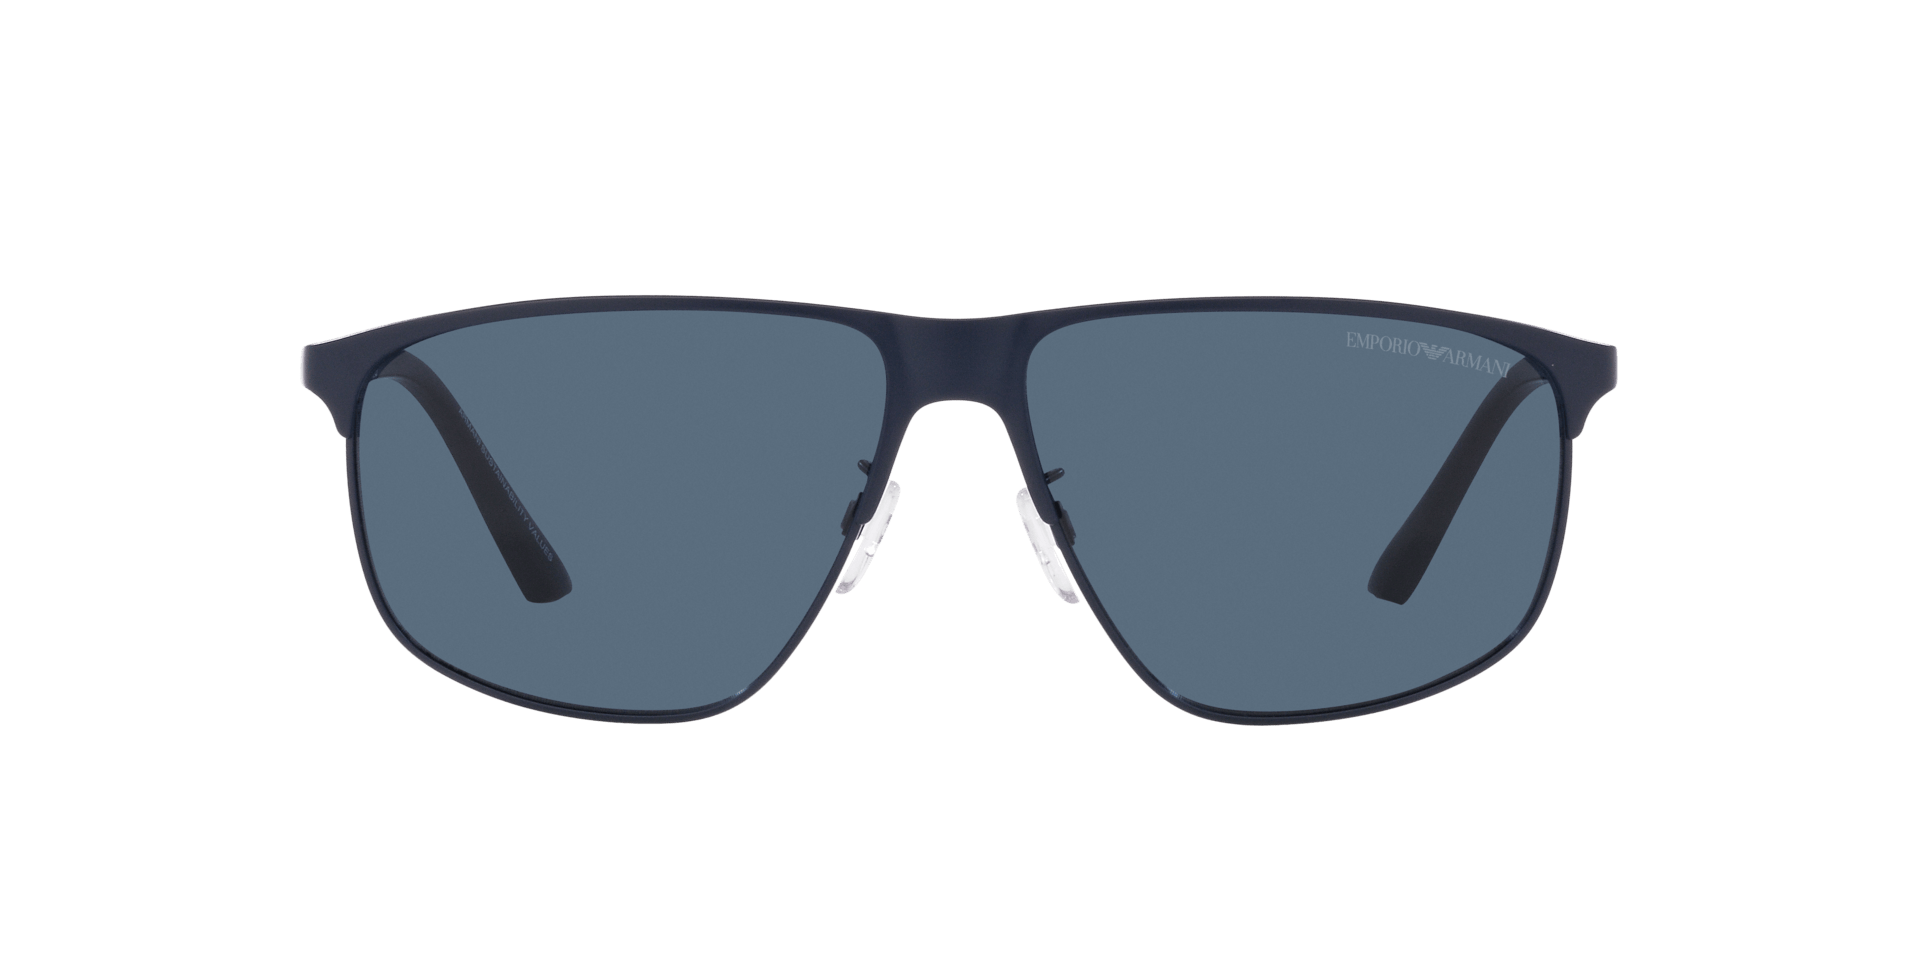 Armani First Copy Sunglasses Online India - Designers Village